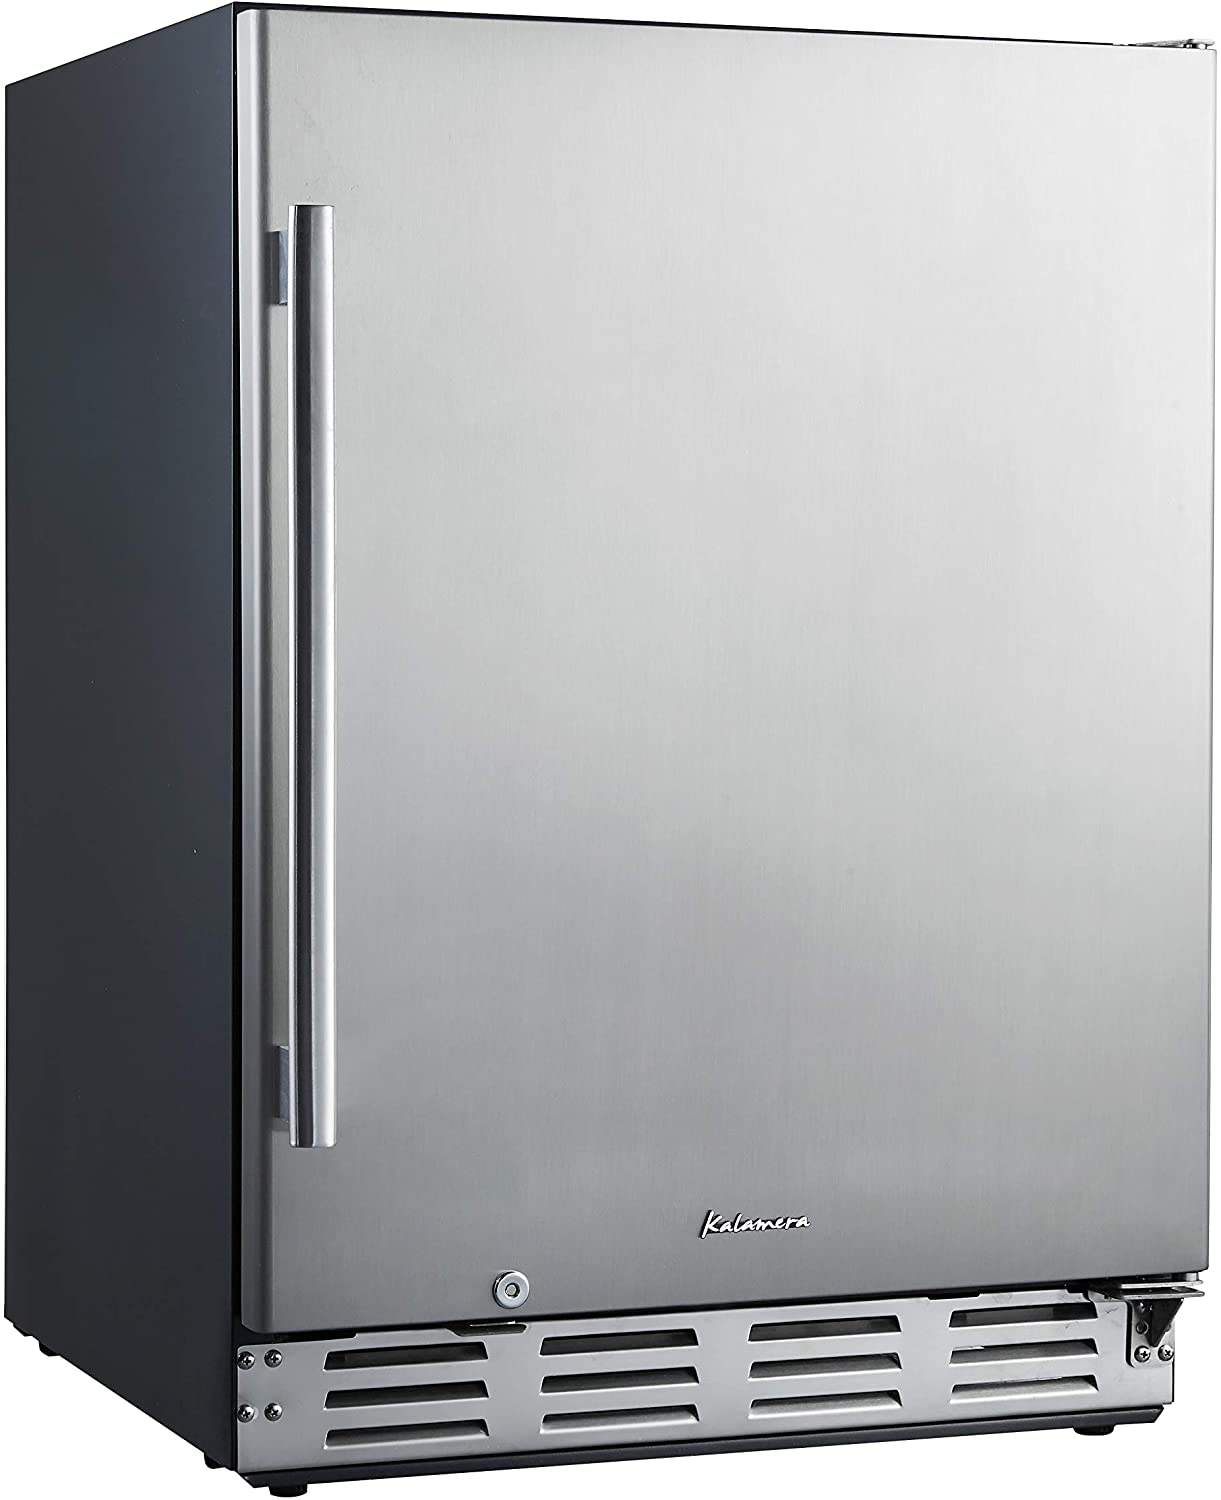 Kalamera 24 inch Outdoor Refrigerator